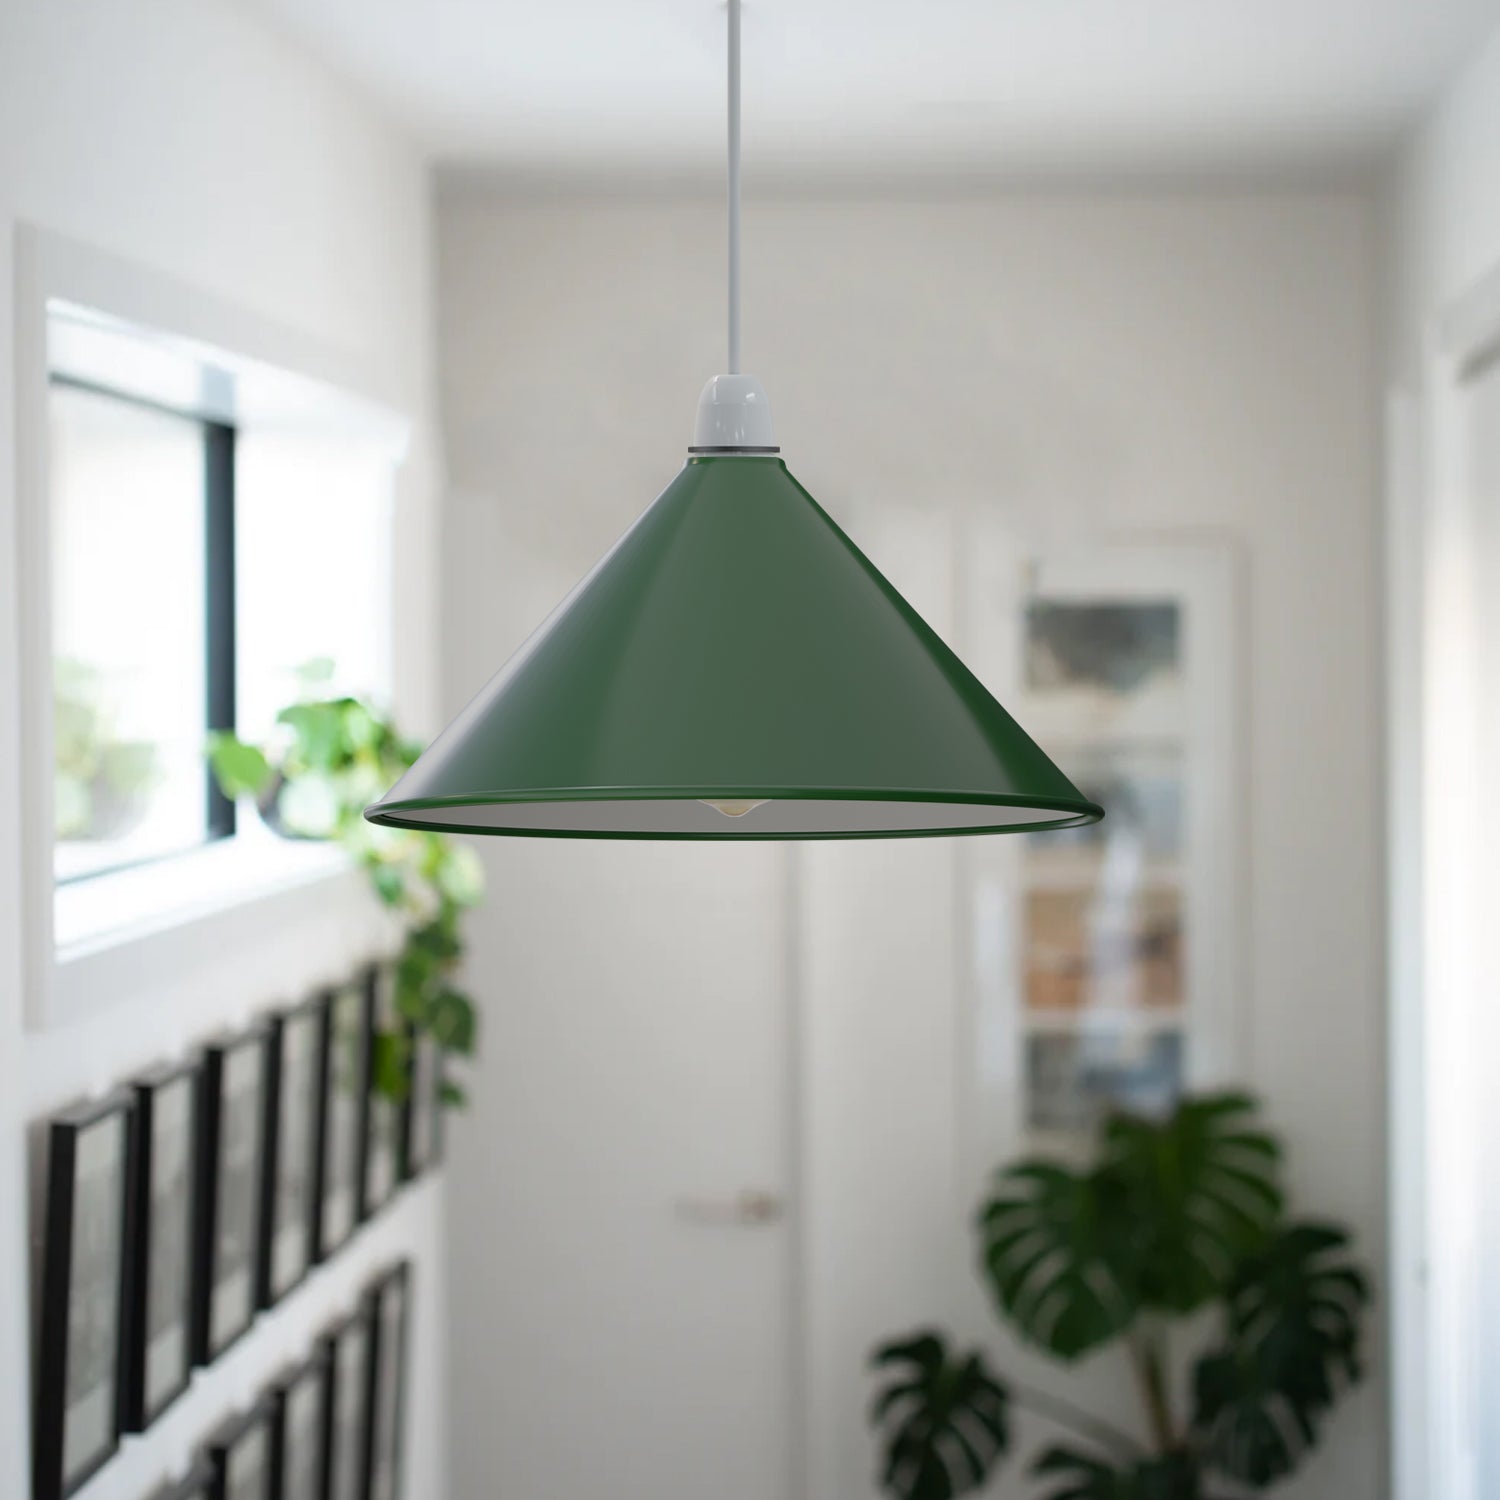  Easy Fit Metal Cone Lamp Shade